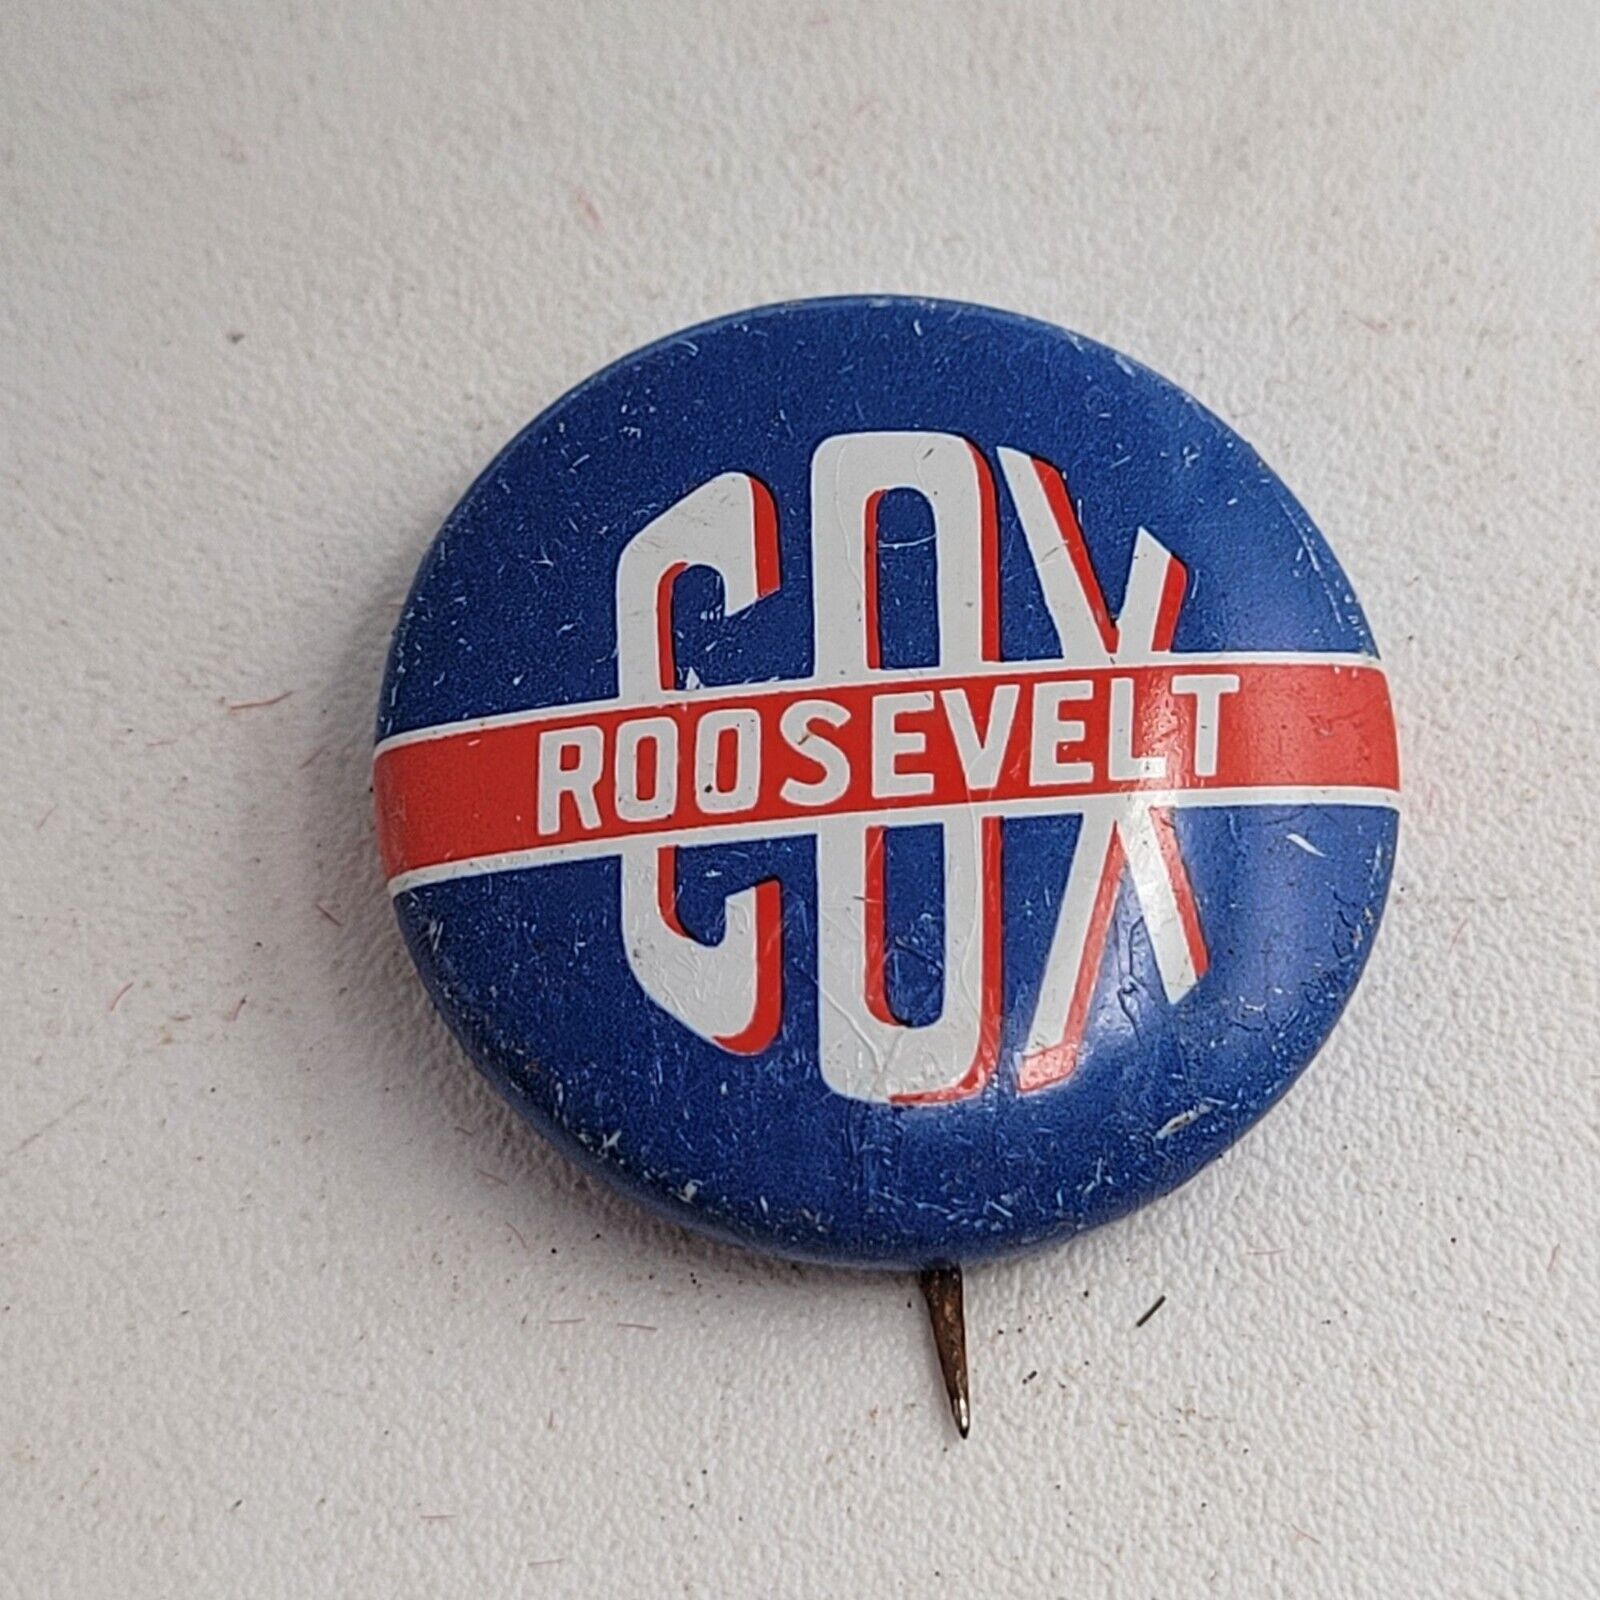 1920 Cox Roosevelt 1\